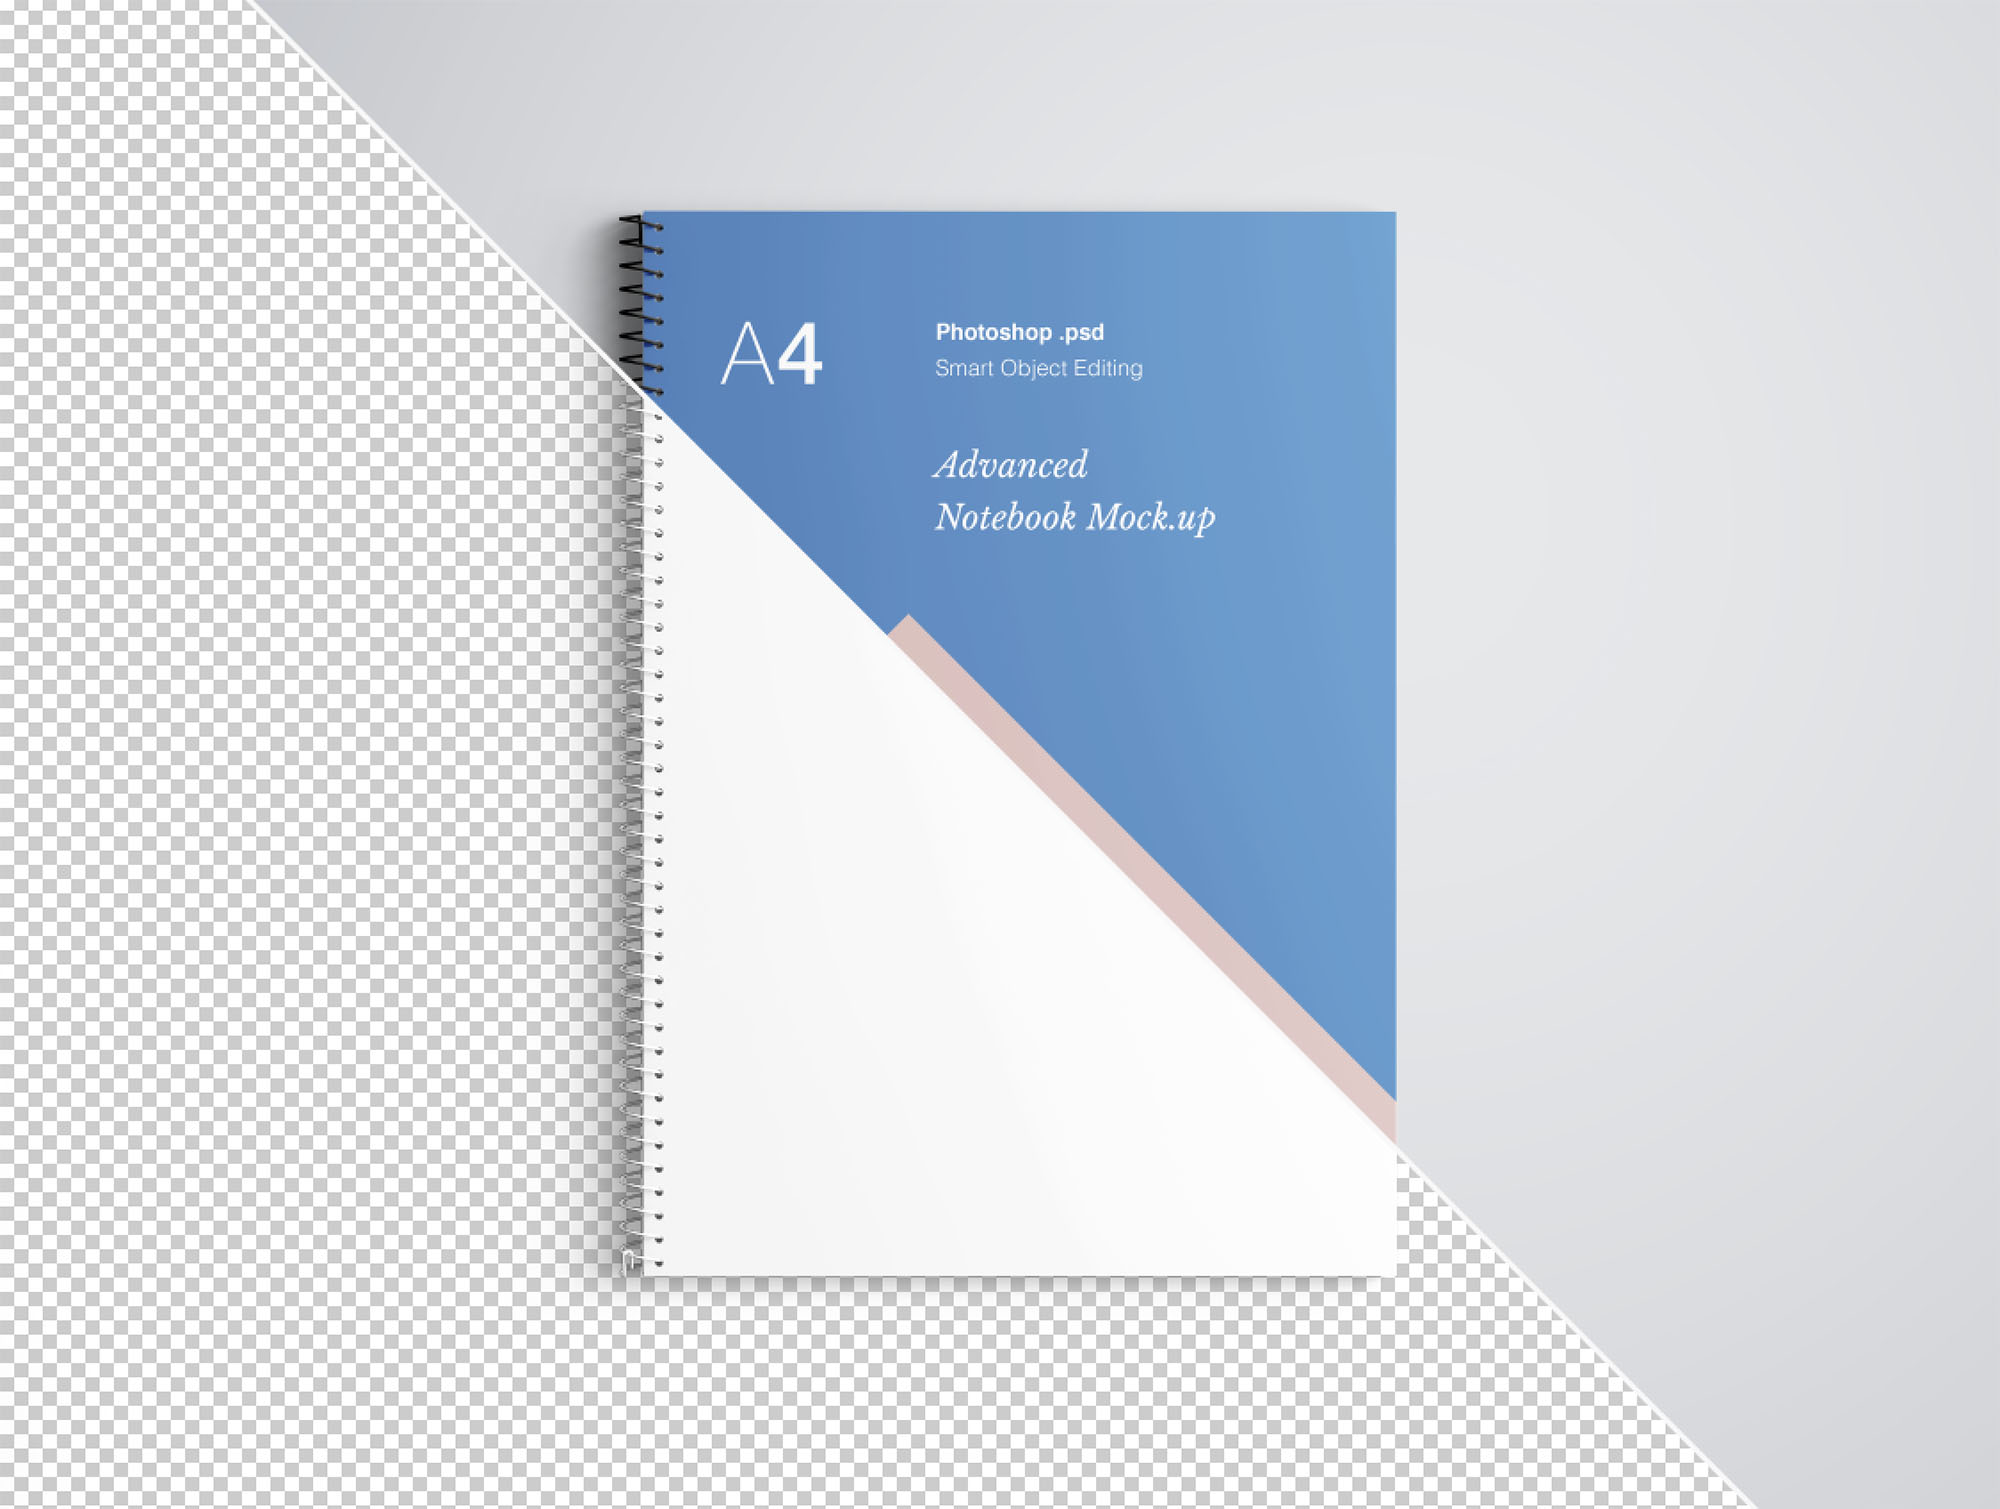 A4尺寸活页记事本封面设计样机模板 A4 Notebook Mockup插图(8)